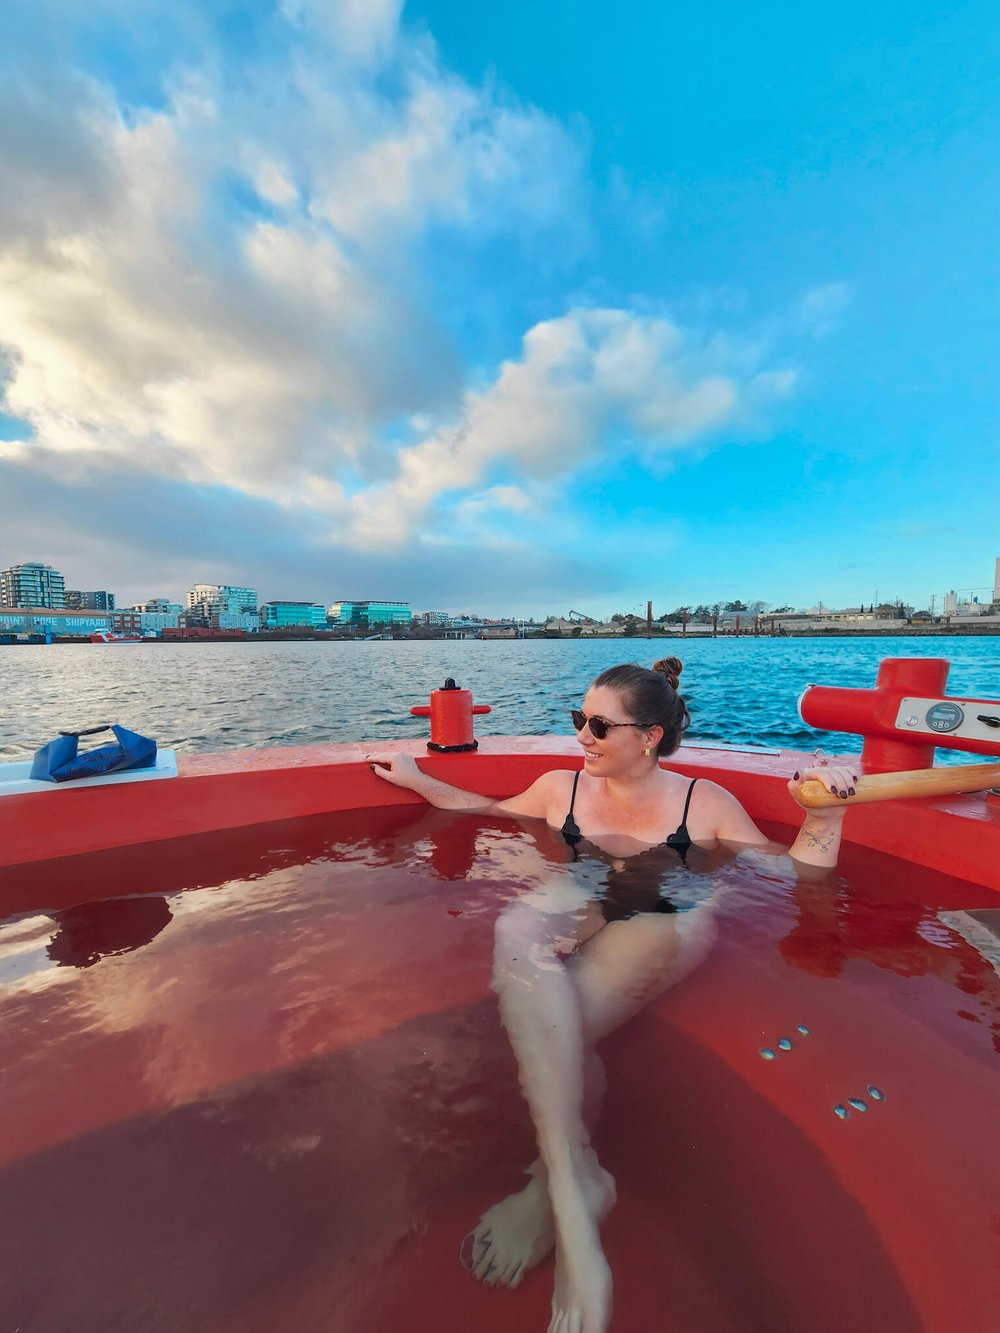 Soaking in a hot tub boat in Victoria, BC